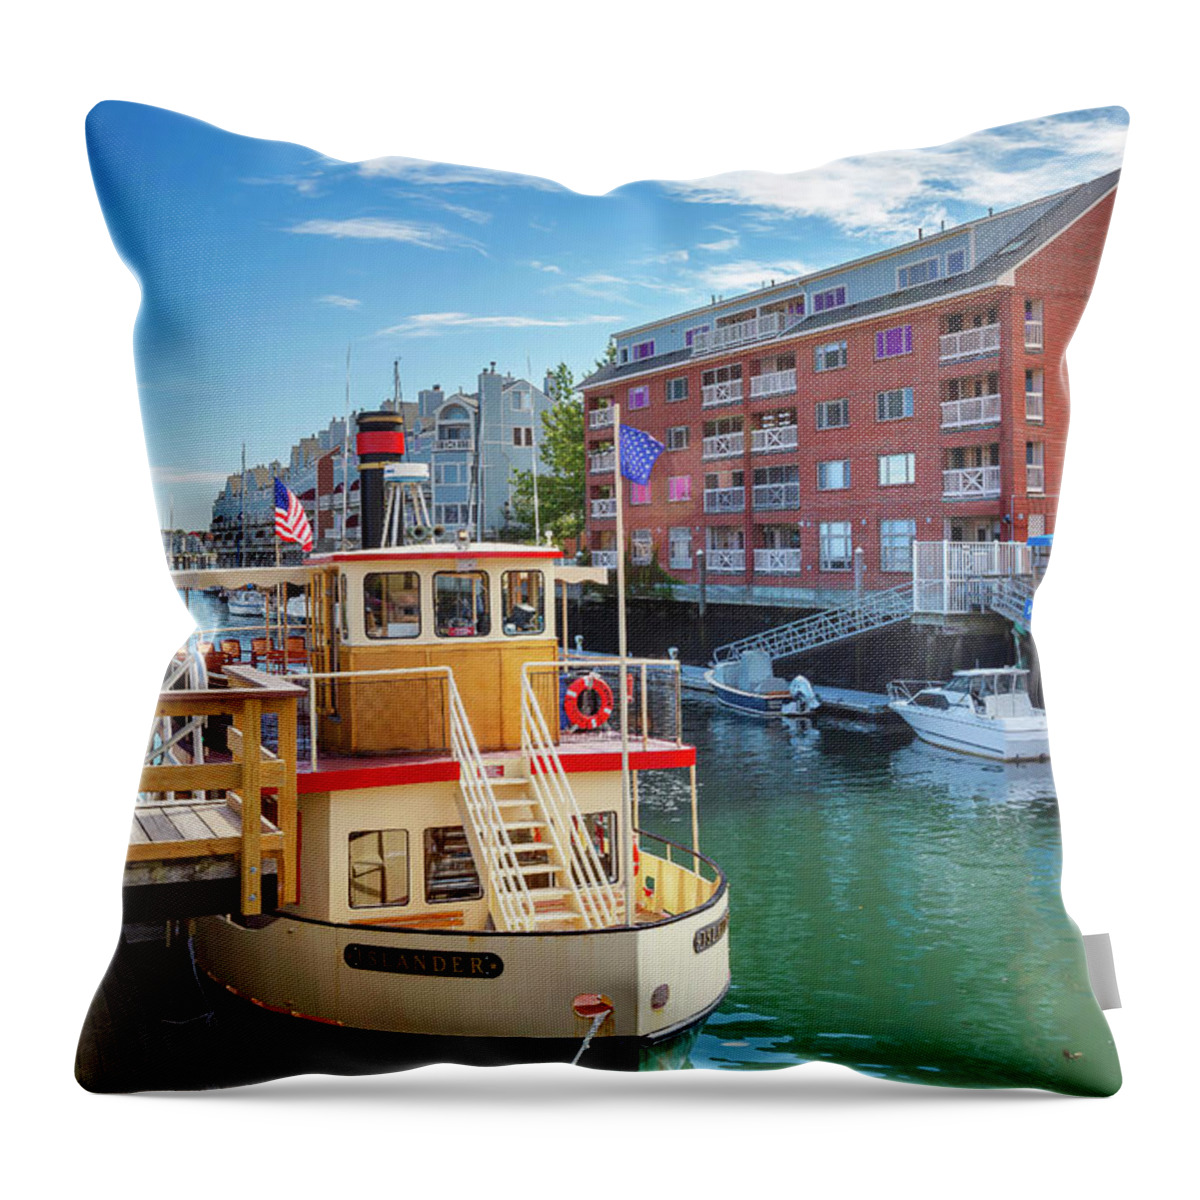 Estock Throw Pillow featuring the digital art Maine, Portland, The Islander Boat by Claudia Uripos